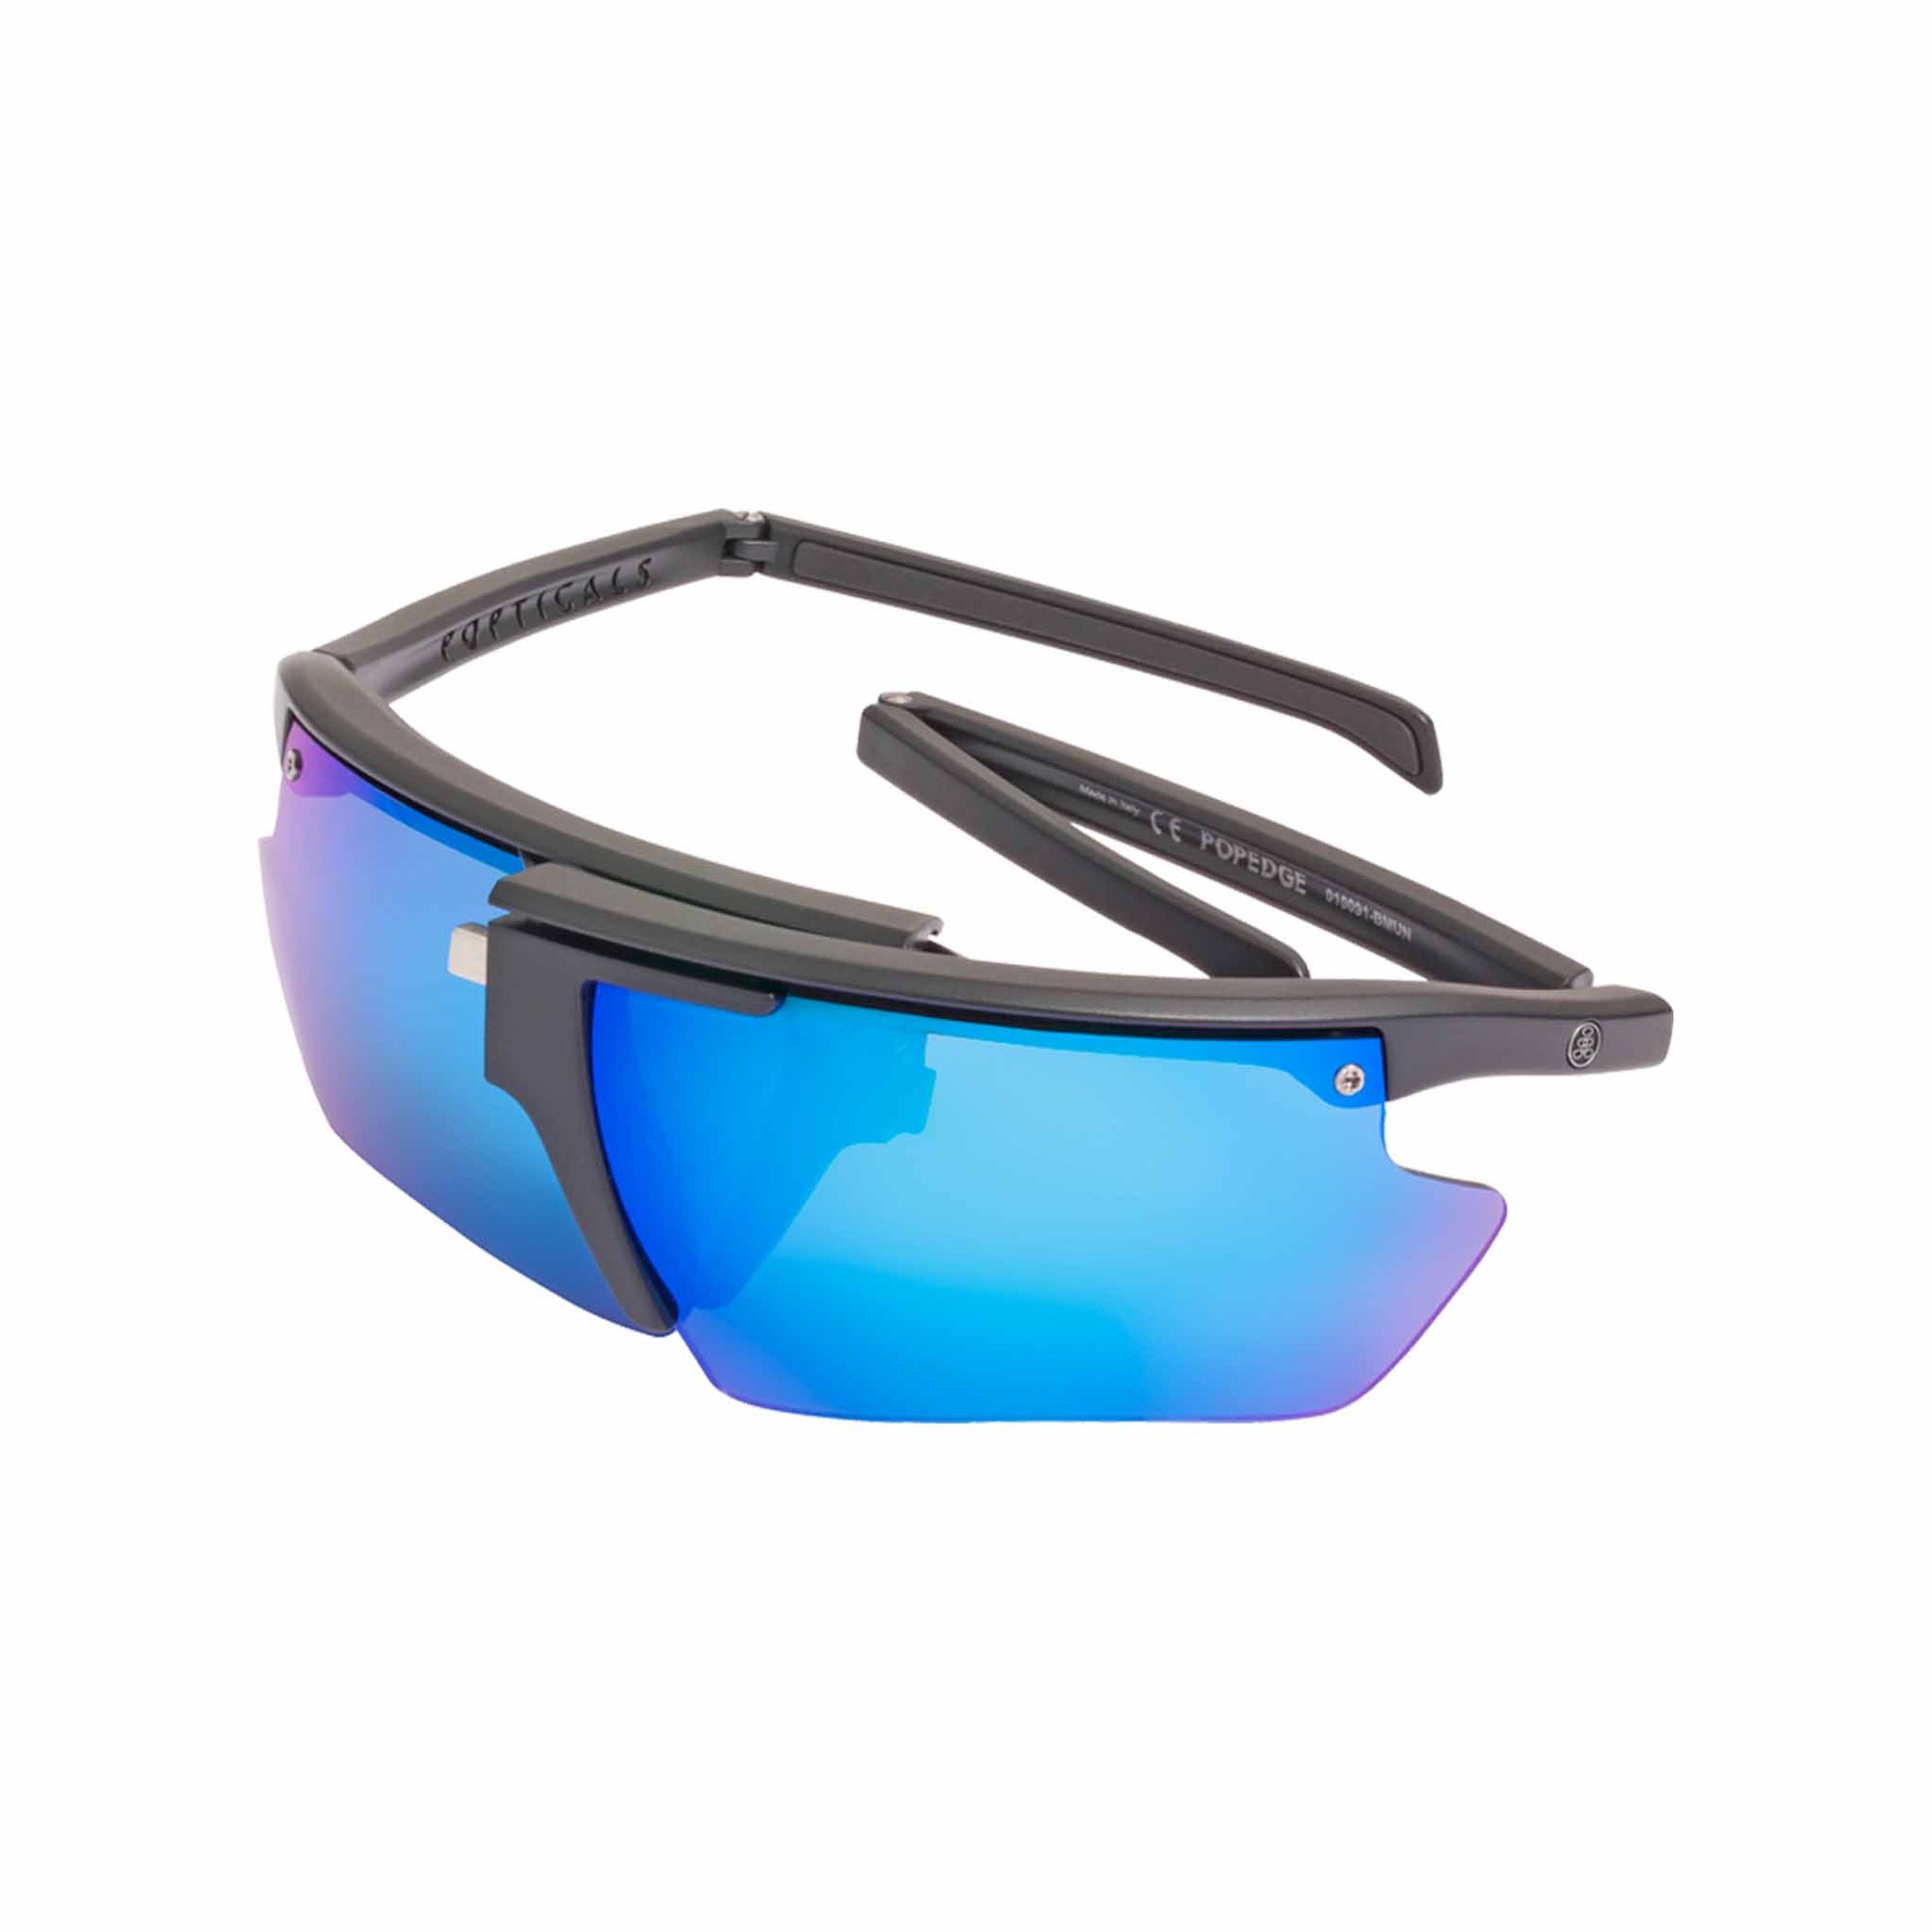 Popticals, Premium Compact Sunglasses, PopEdge, 010091-BMUN, Polarized Sunglasses, Matte Black Frame, Gray Lenses with Blue Mirror Finish, Spider View